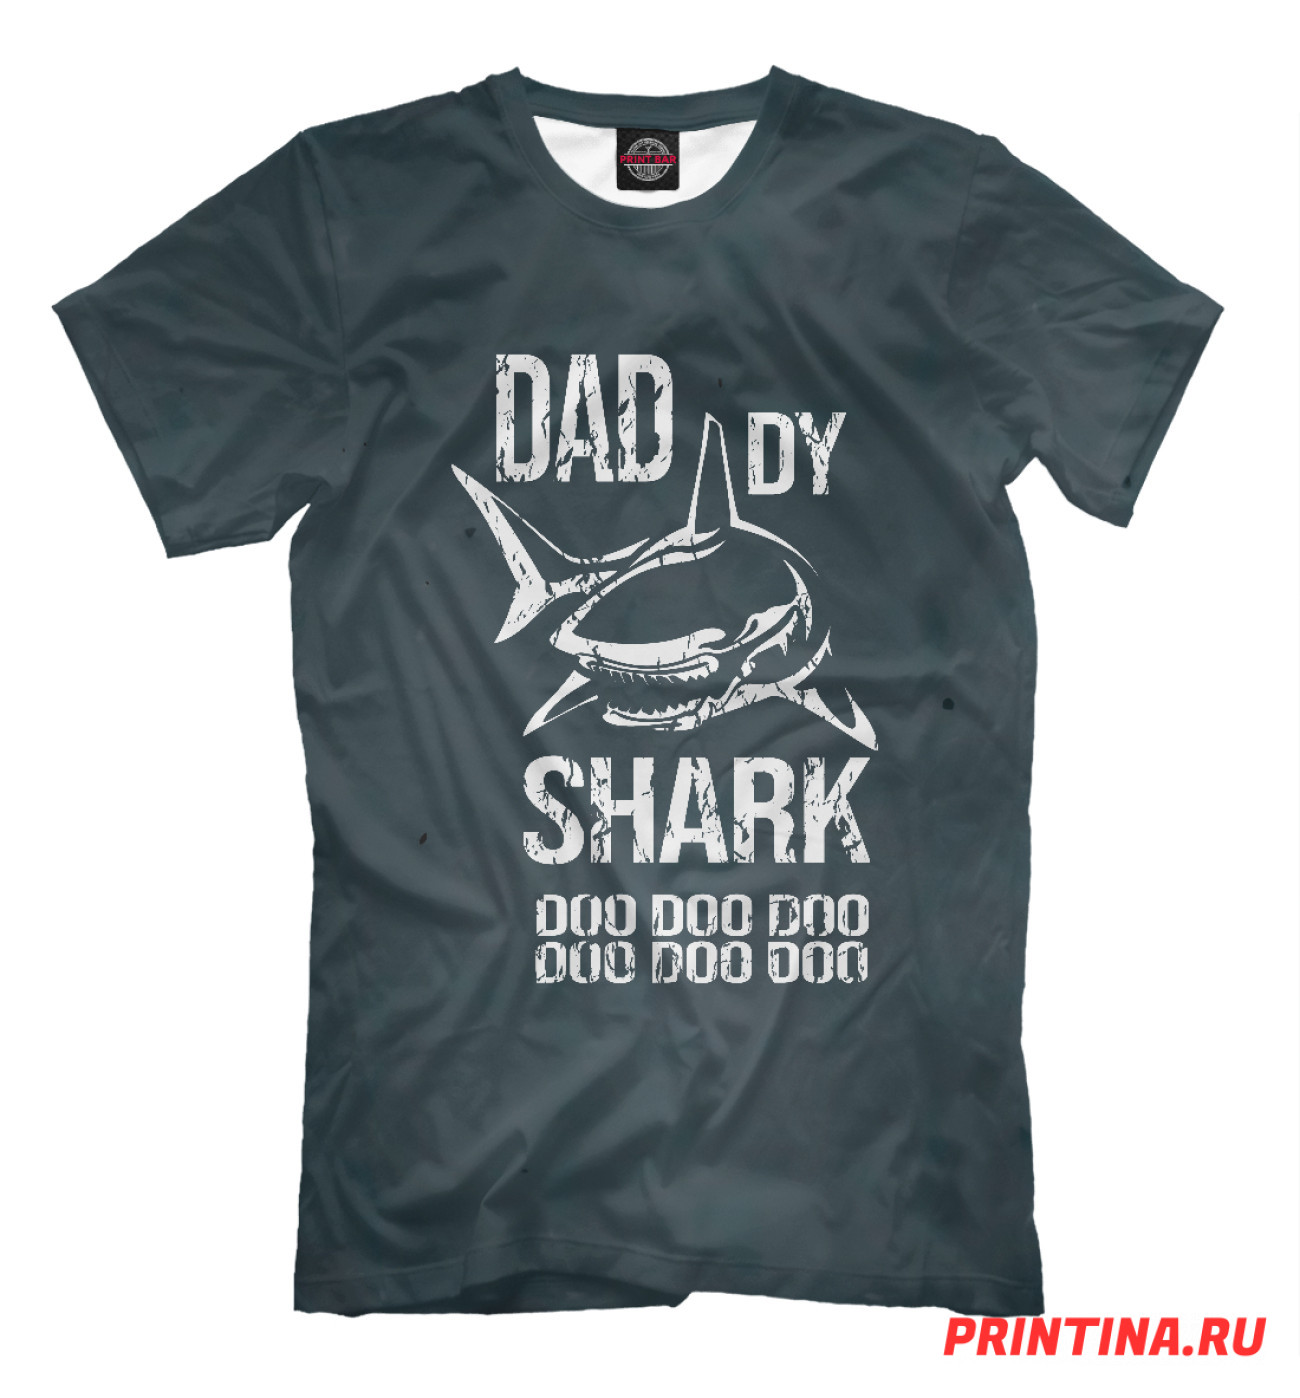 Мужская Футболка Daddy Big Shark DOO, артикул: AKL-121308-fut-2